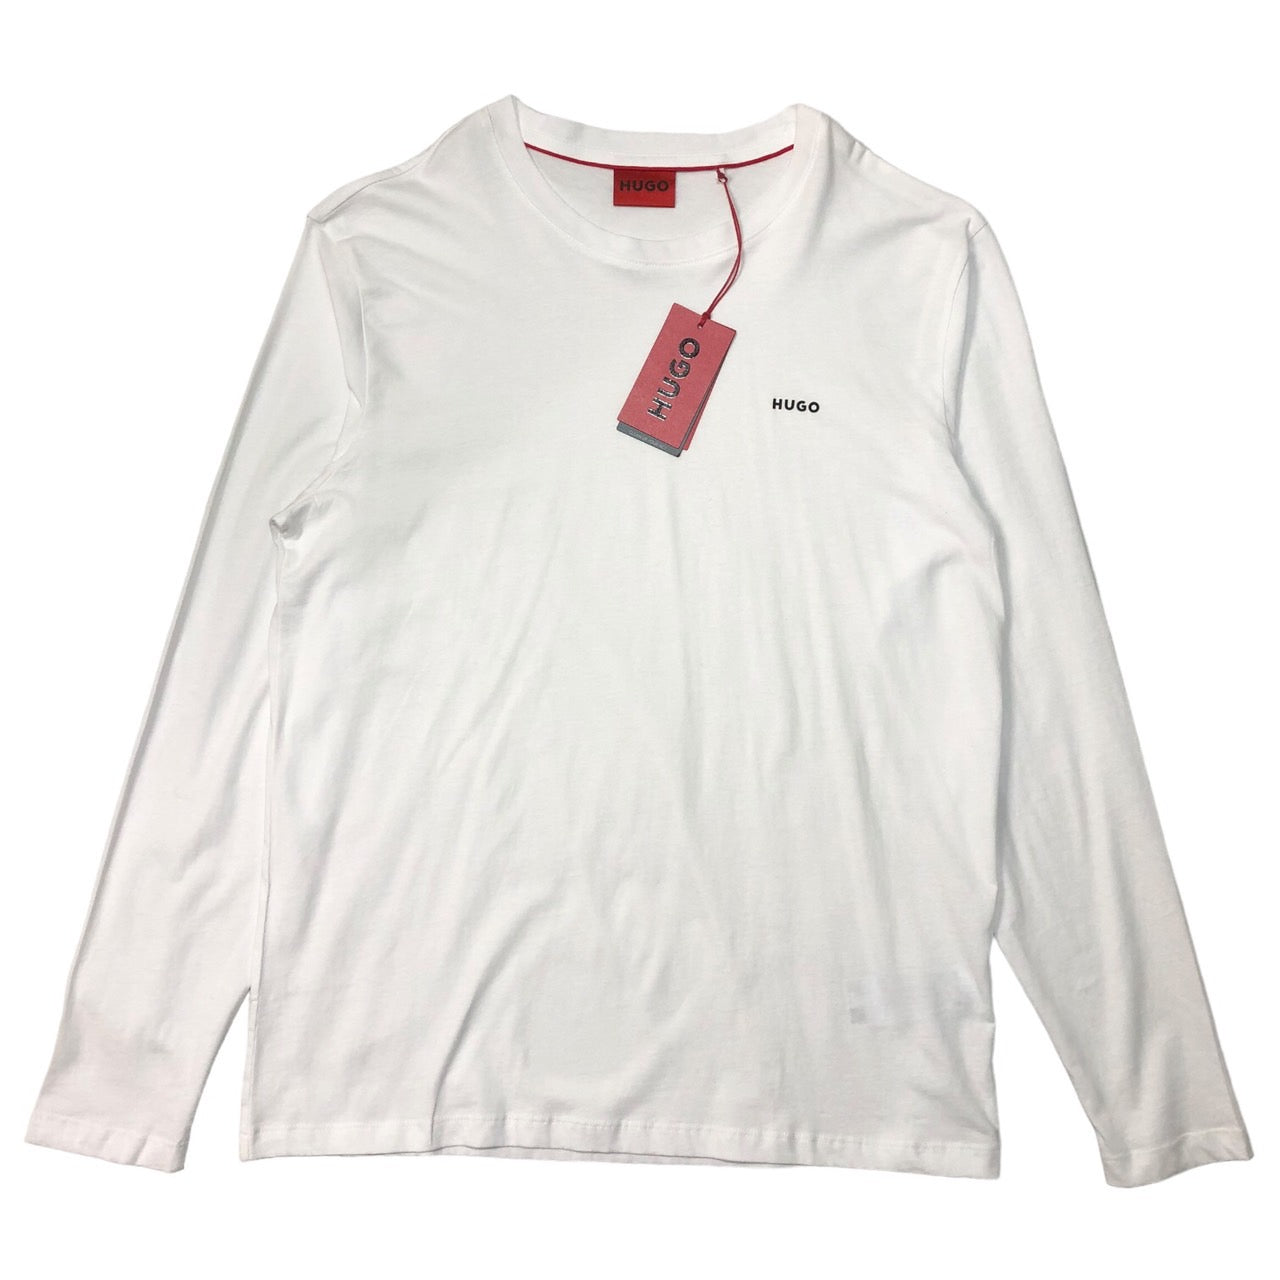 HUGO BOSS(ヒューゴボス) ロングスリーブTシャツ コットンジャージー ロゴプリント/ロゴ長袖Tシャツ 4021406673212 M ホワイト